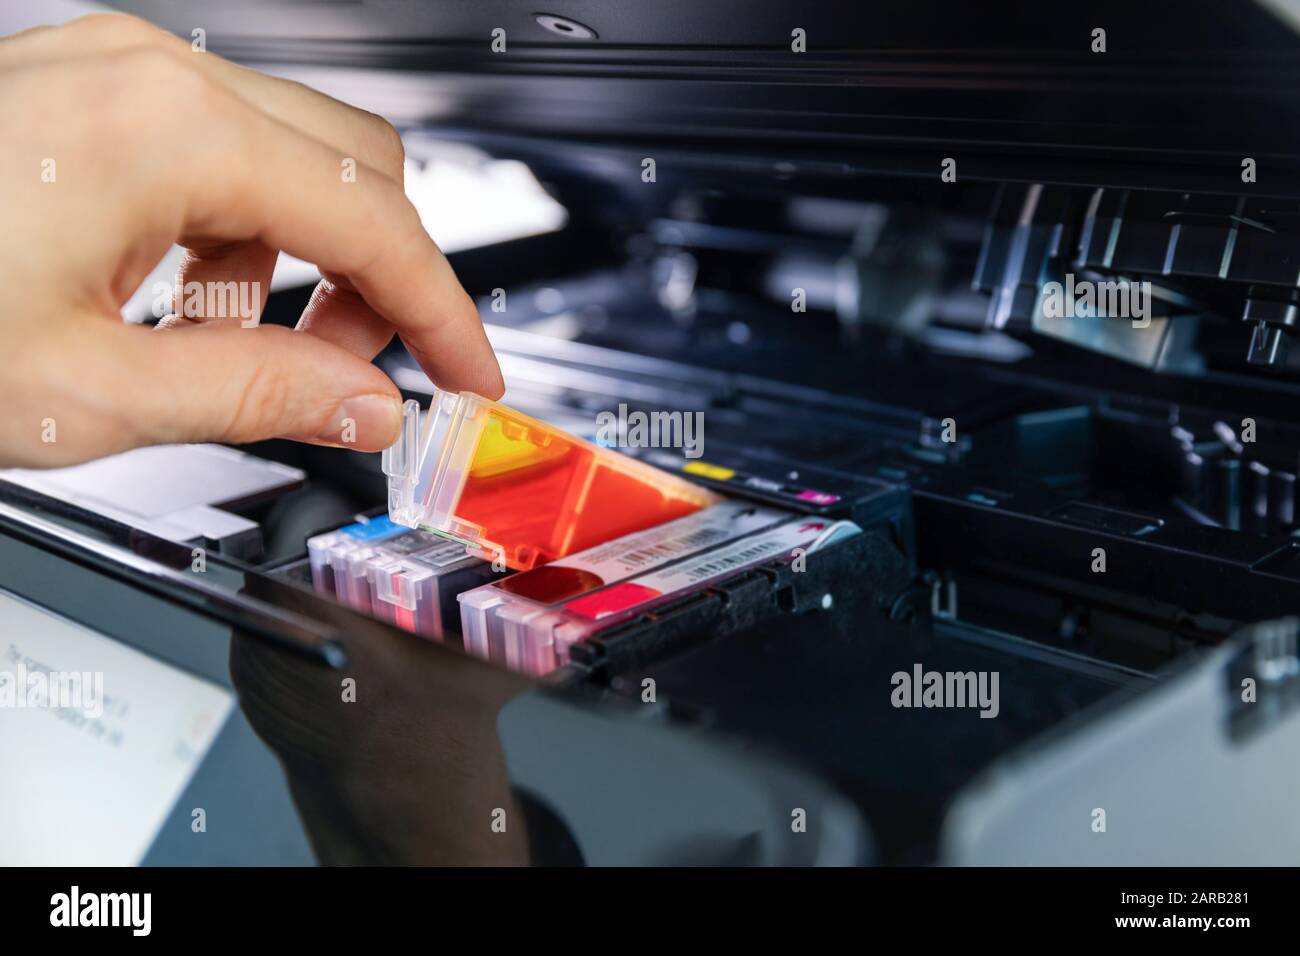 office equipment maintenance and service - hand replace inkjet printer cartridge Stock Photo